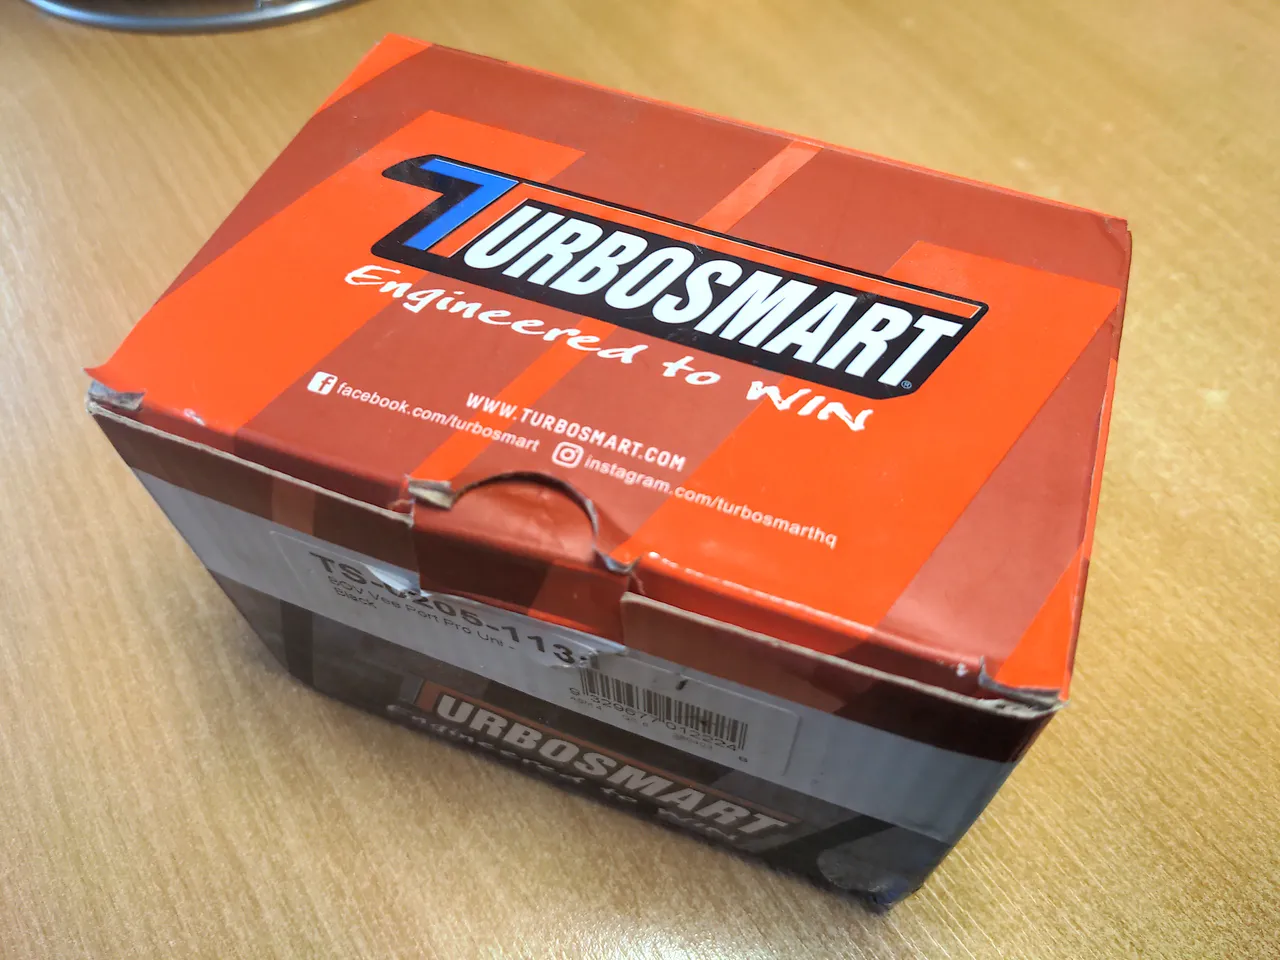 A box with Turbosmart written on it.